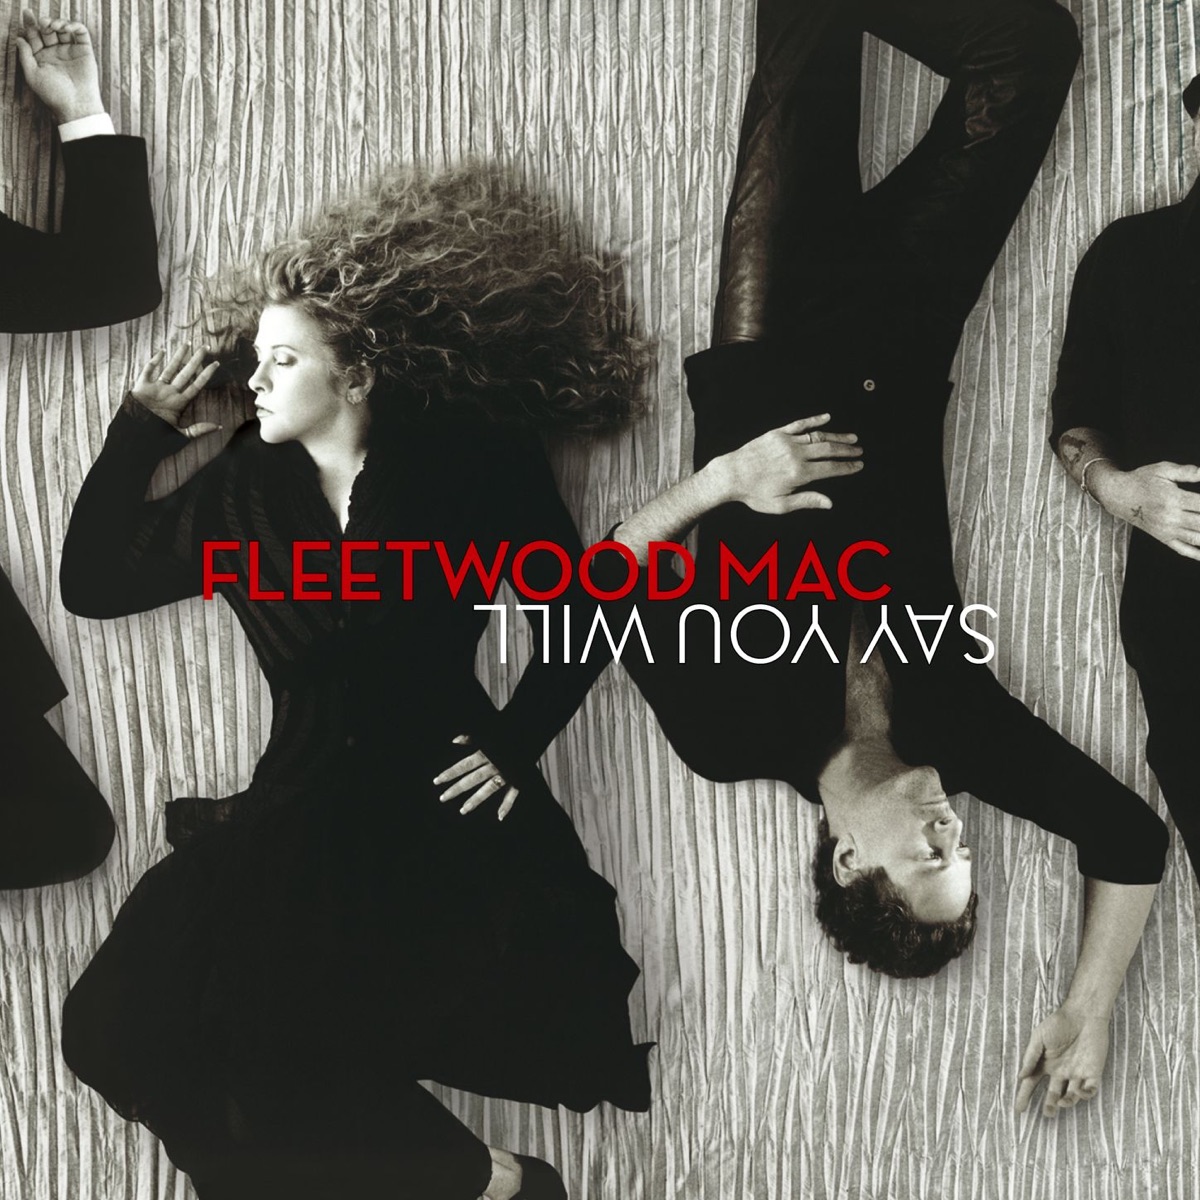 The Dance (Live) - Album by Fleetwood Mac - Apple Music